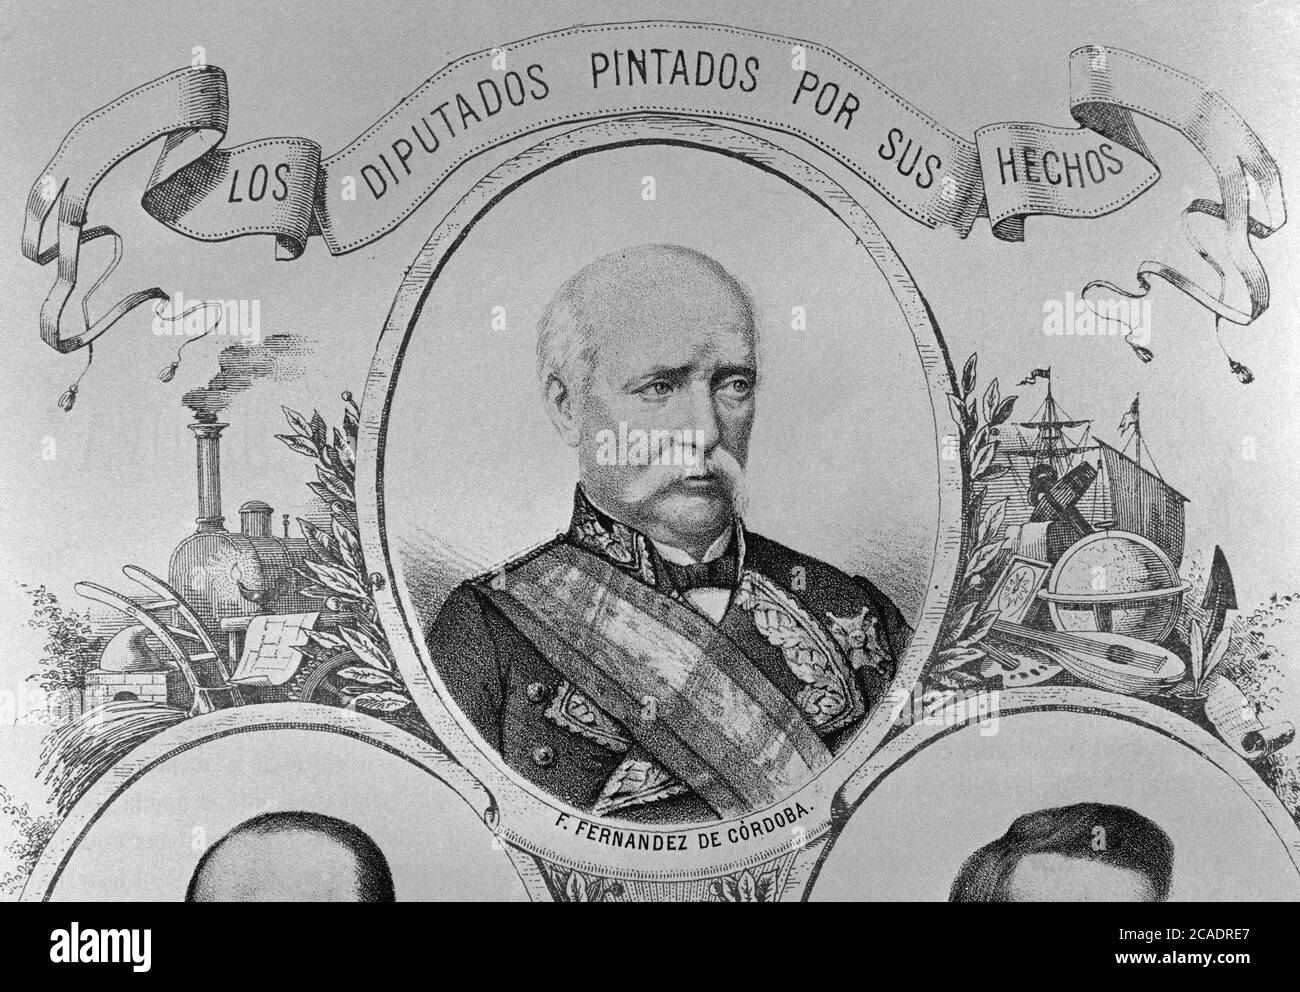 FERNANDO FERNANDEZ DE CORDOBA - MARQUES DE MENDIGORRIA (1809/1883) - MILITAR Y POLITICO ESPAÑOL. Stock Photo